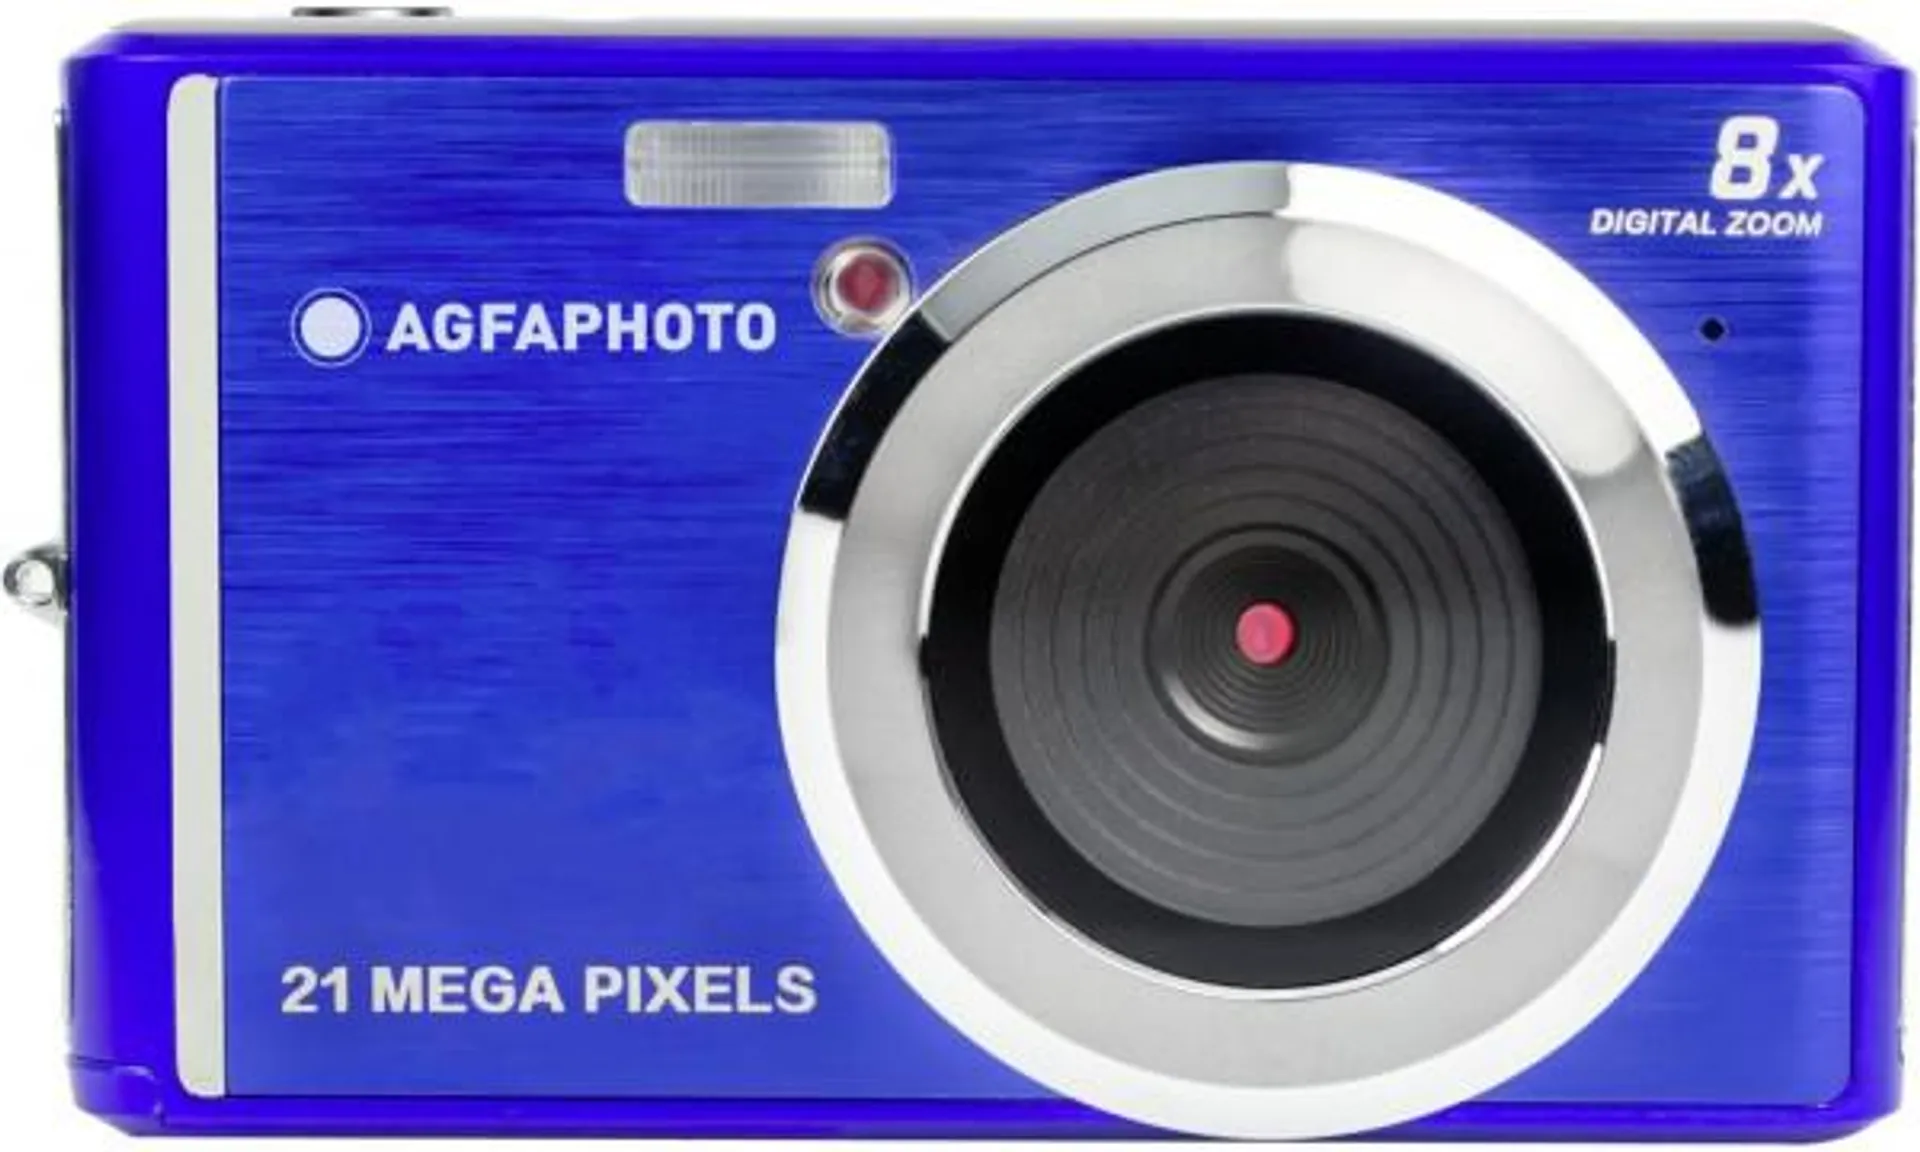 Agfaphoto Realishot DC5200 Digitale Kompaktkamera blau